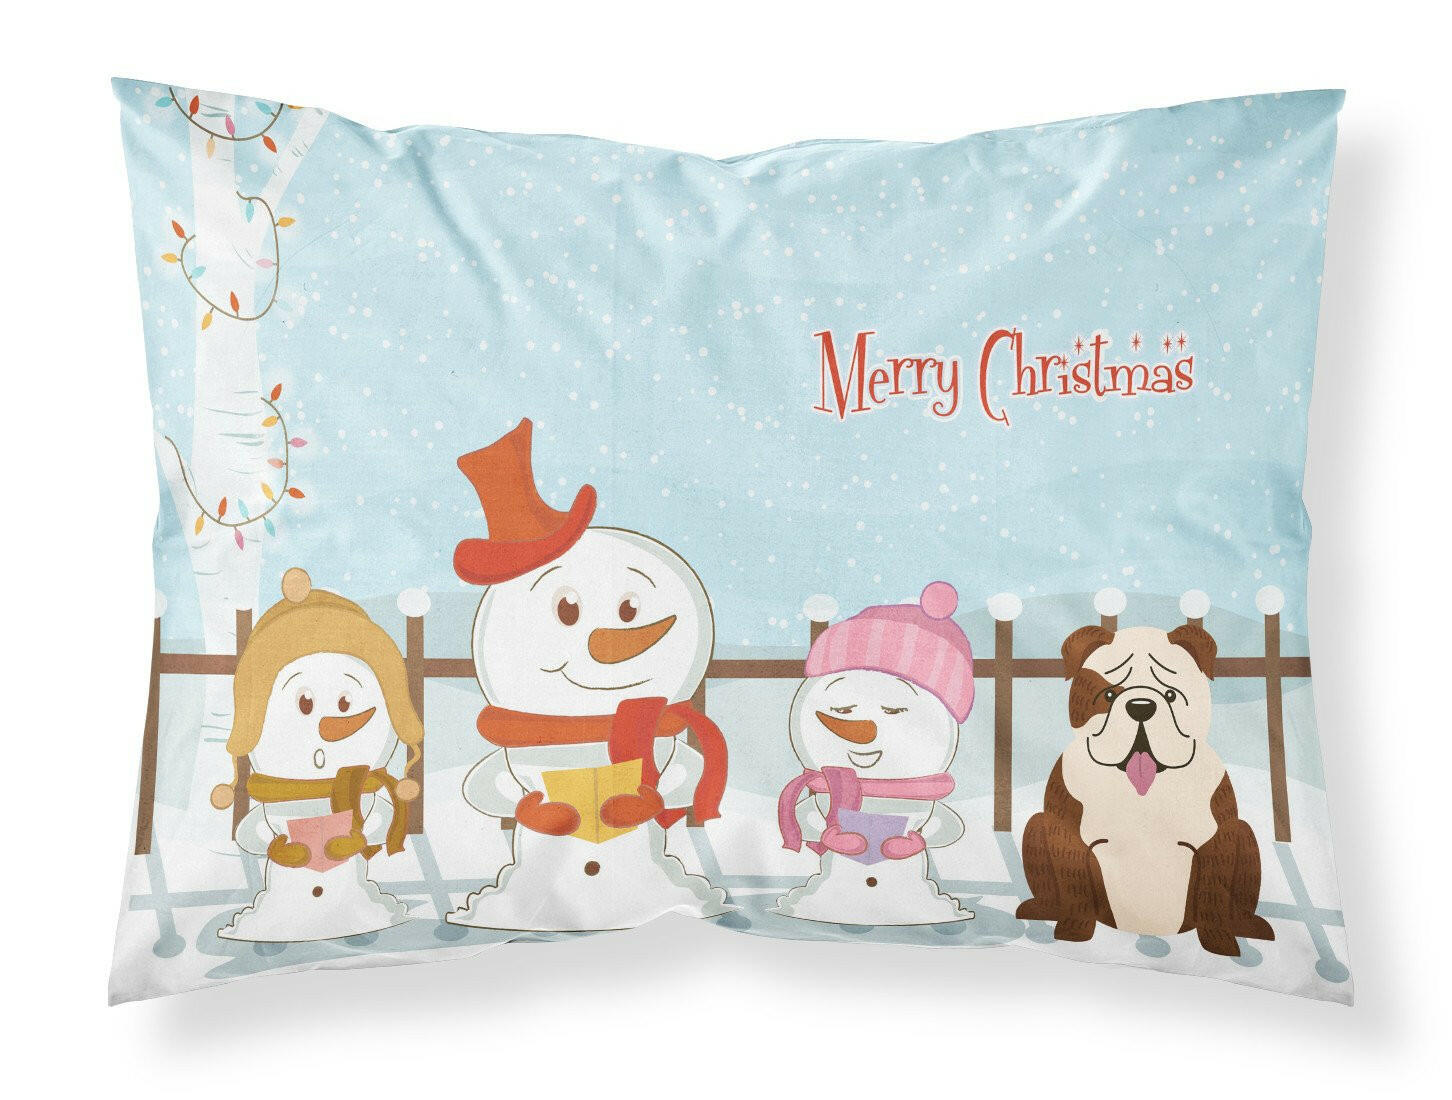 Merry Christmas Carolers English Bulldog Brindle White Fabric Standard Pillowcase BB2452PILLOWCASE by Caroline's Treasures